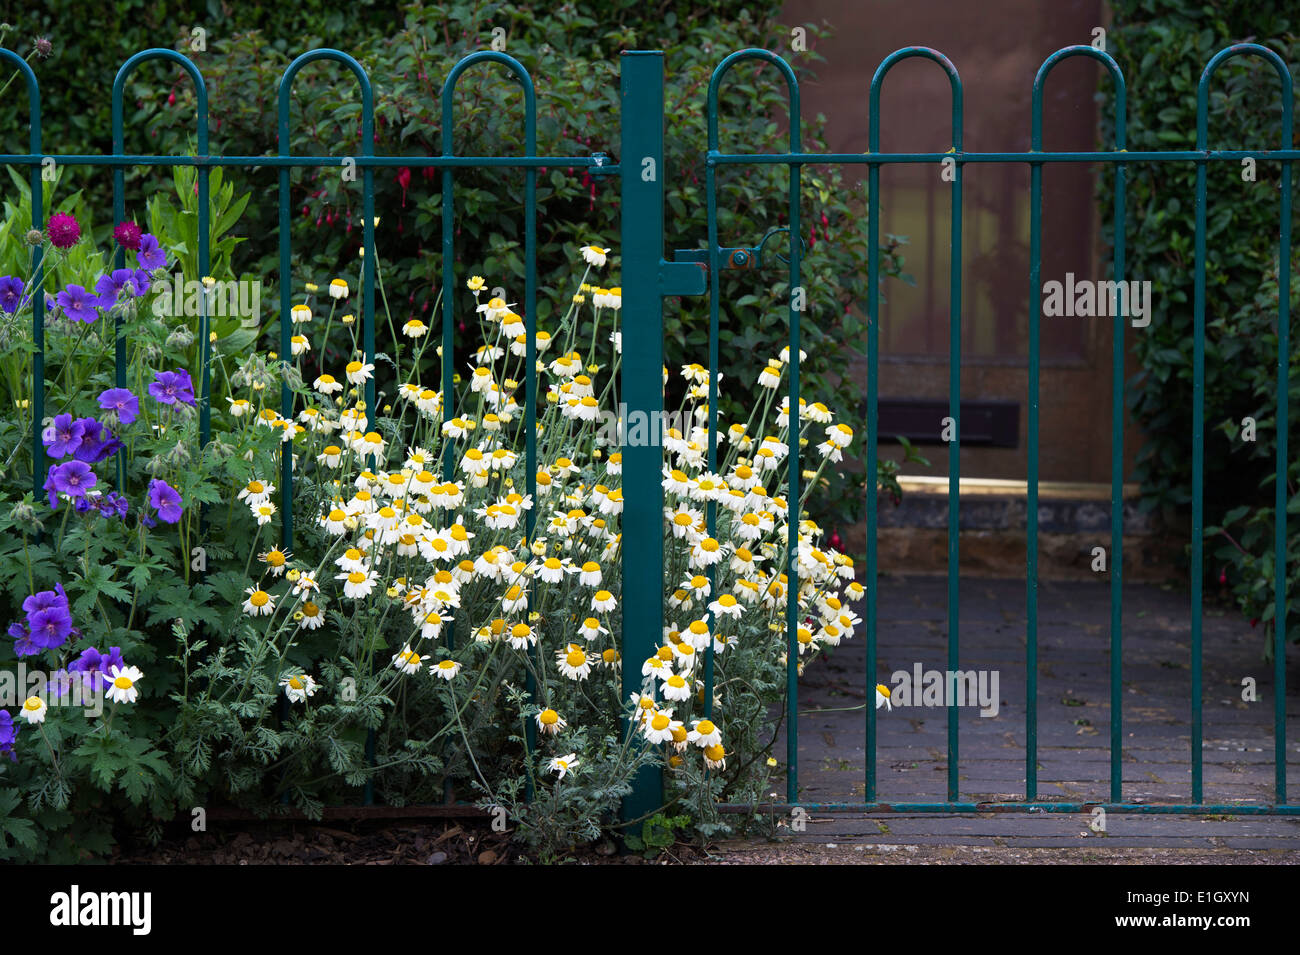 Anthemis Nobilis. Roman Chamomile flower growing through metal garden railings in an English garden Stock Photo